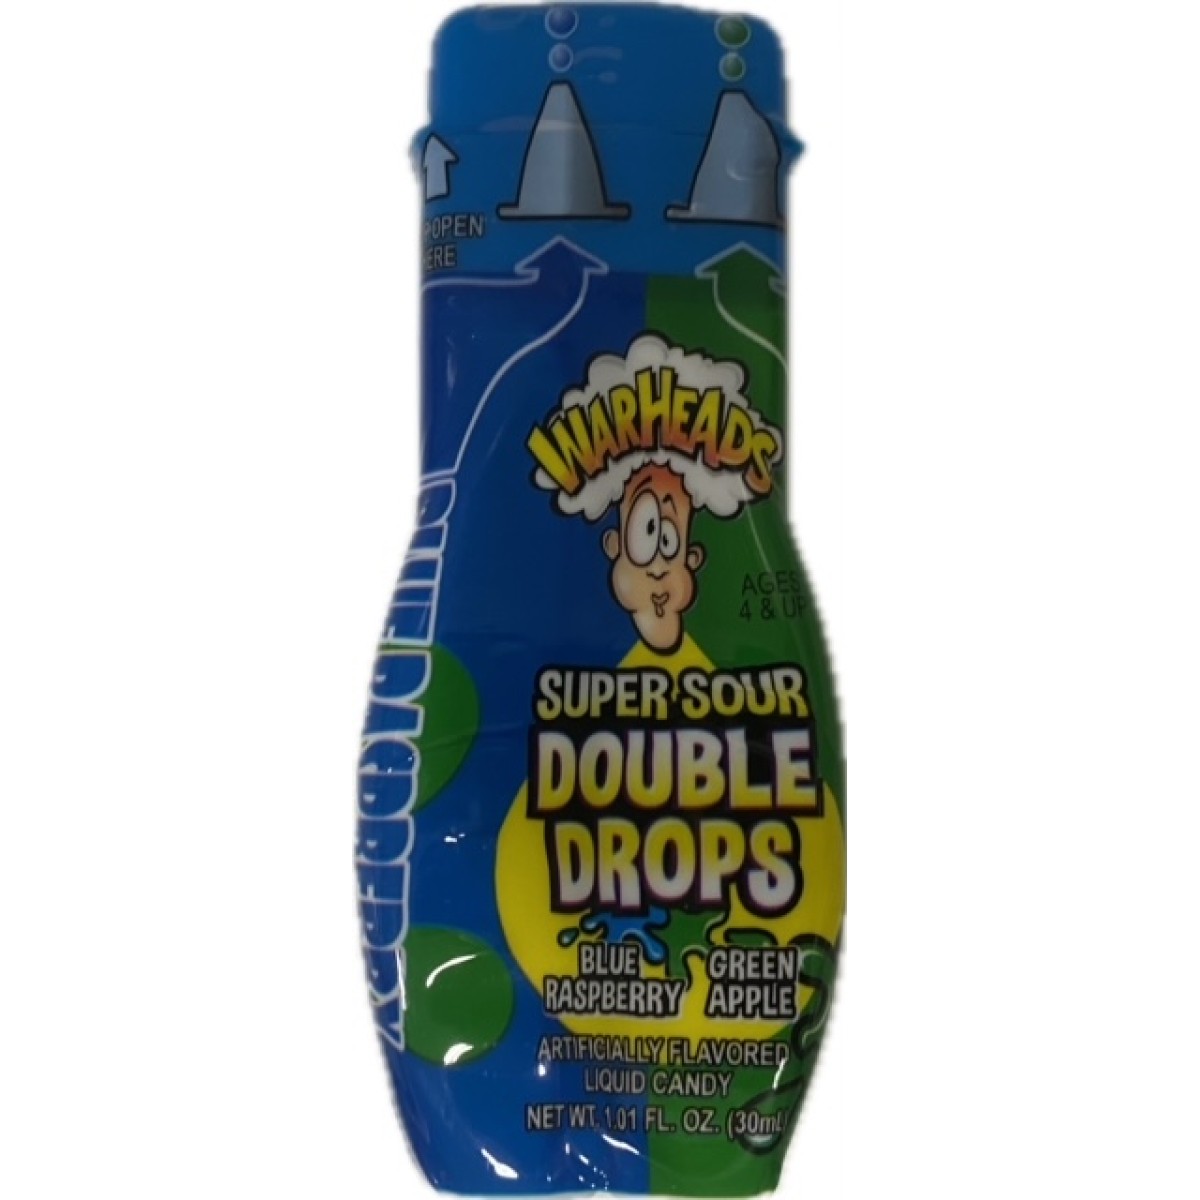 Warheads Super Sour Double drops